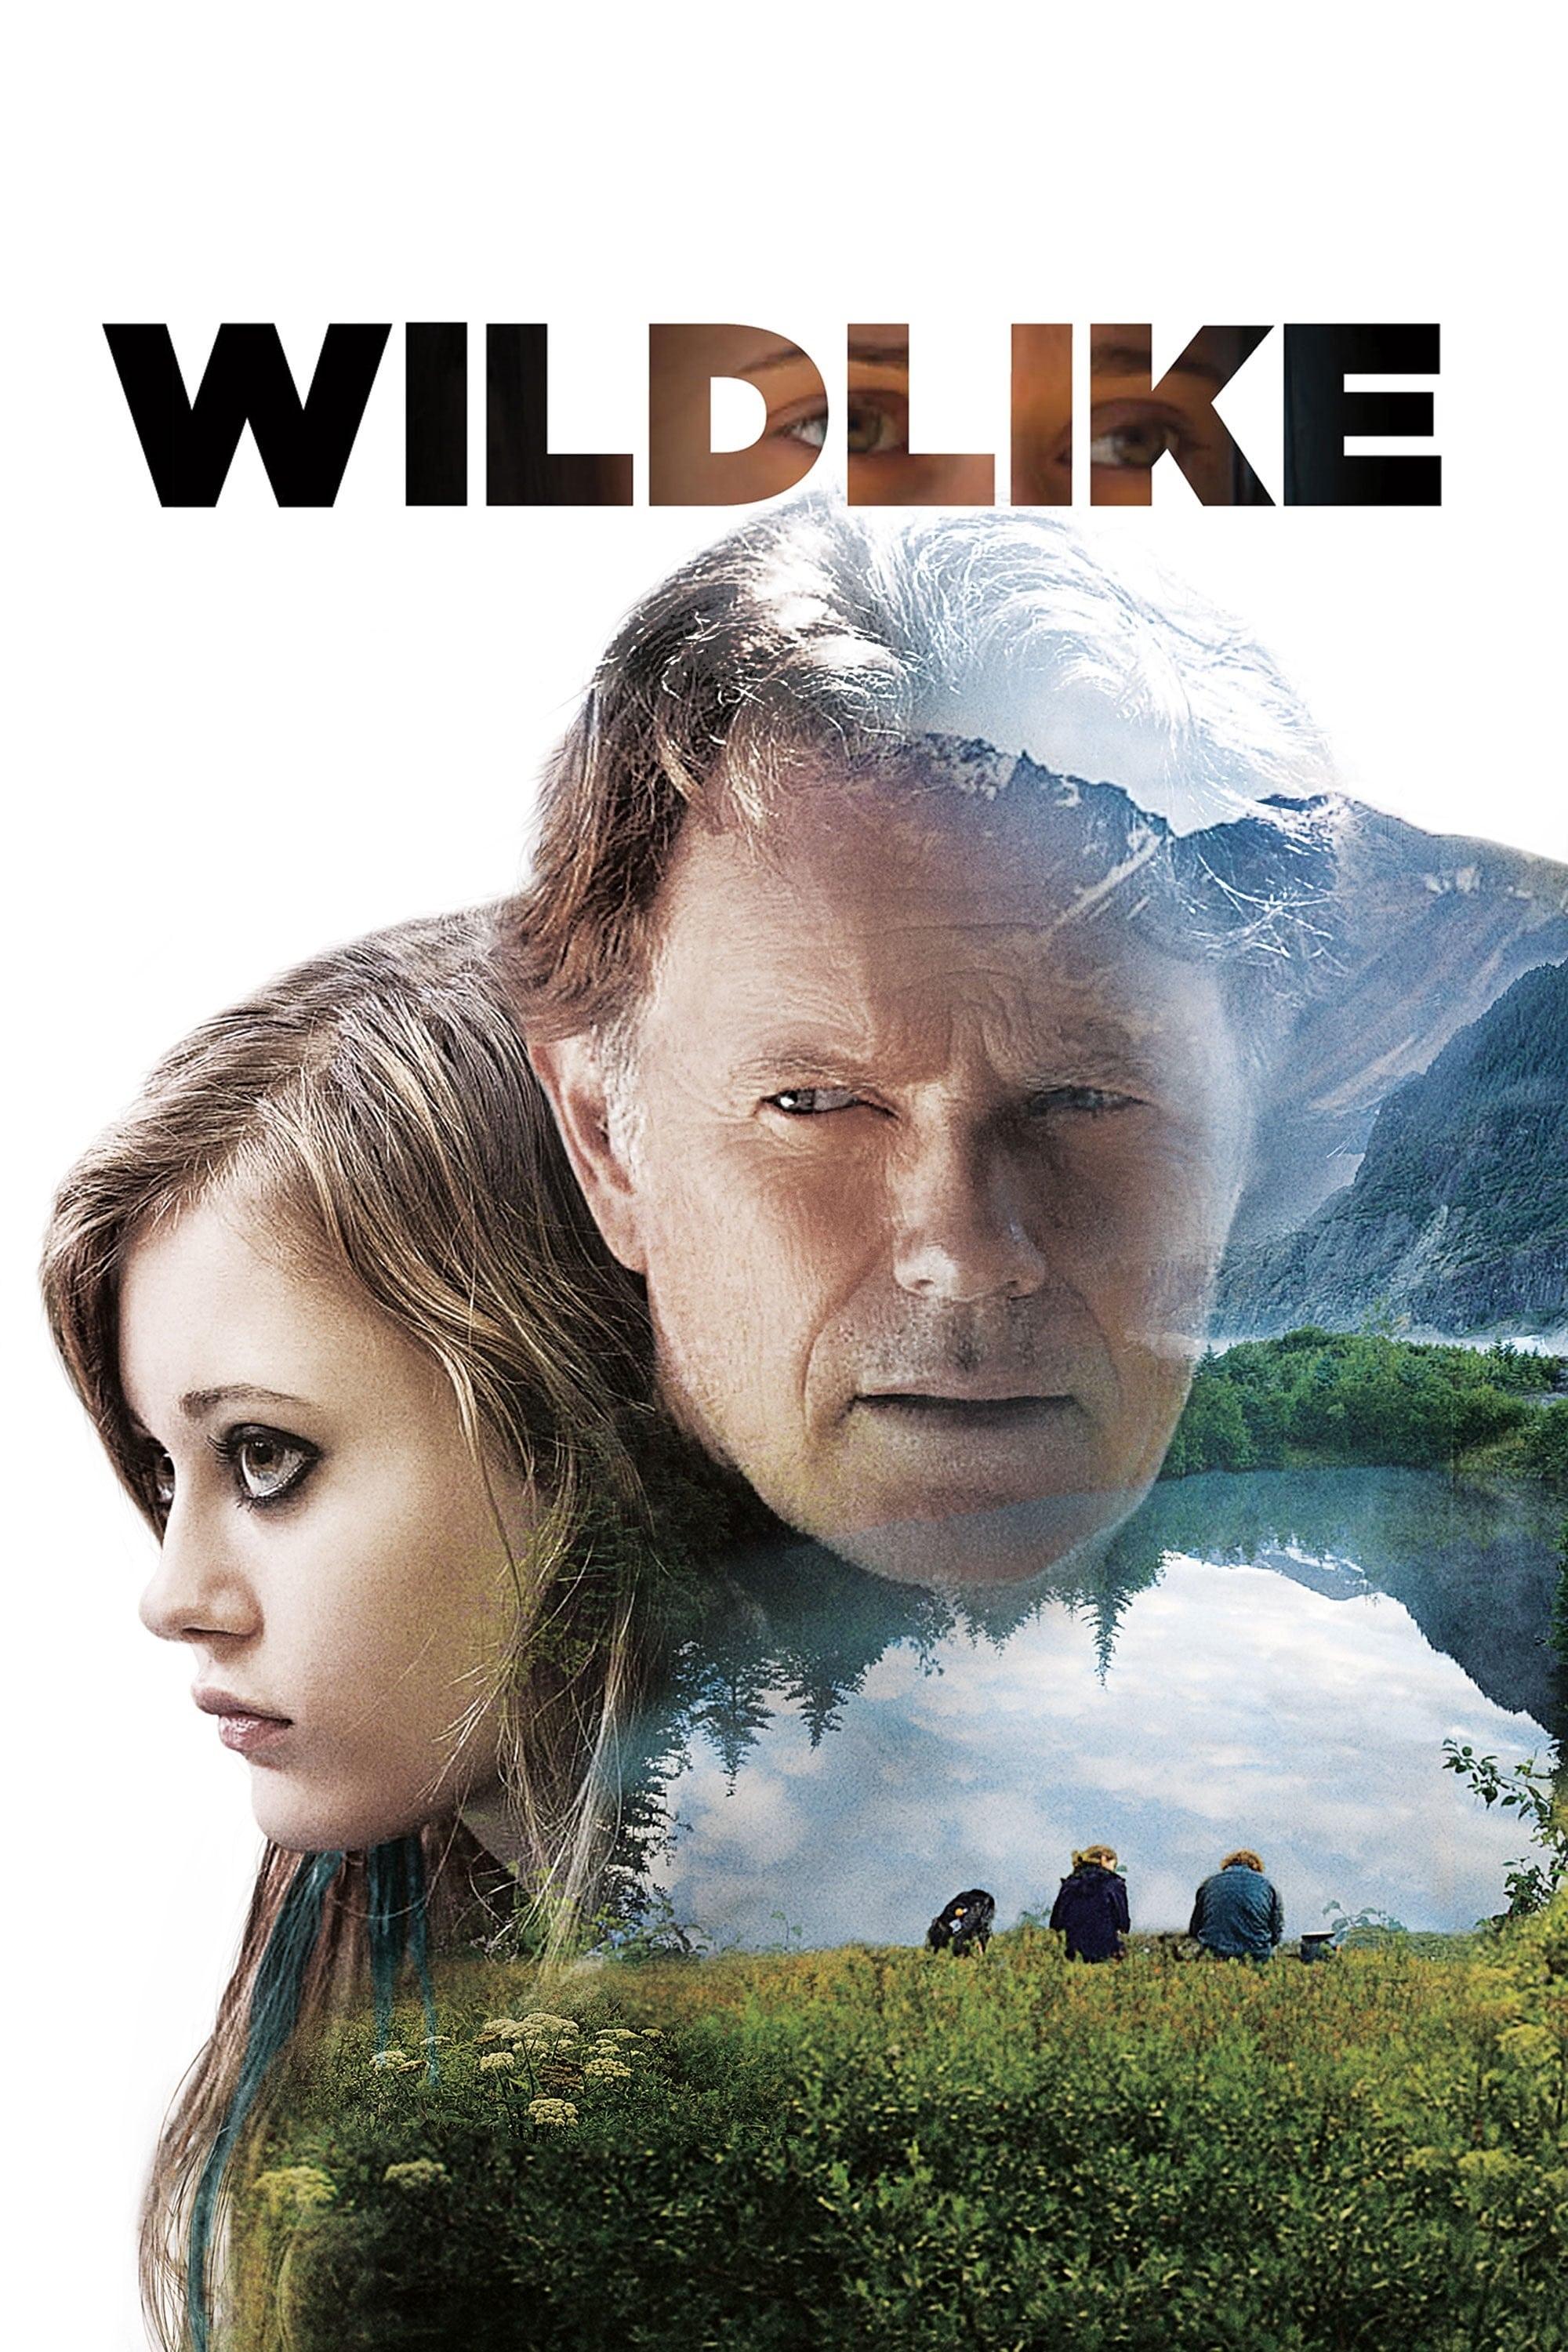 Wildlike poster